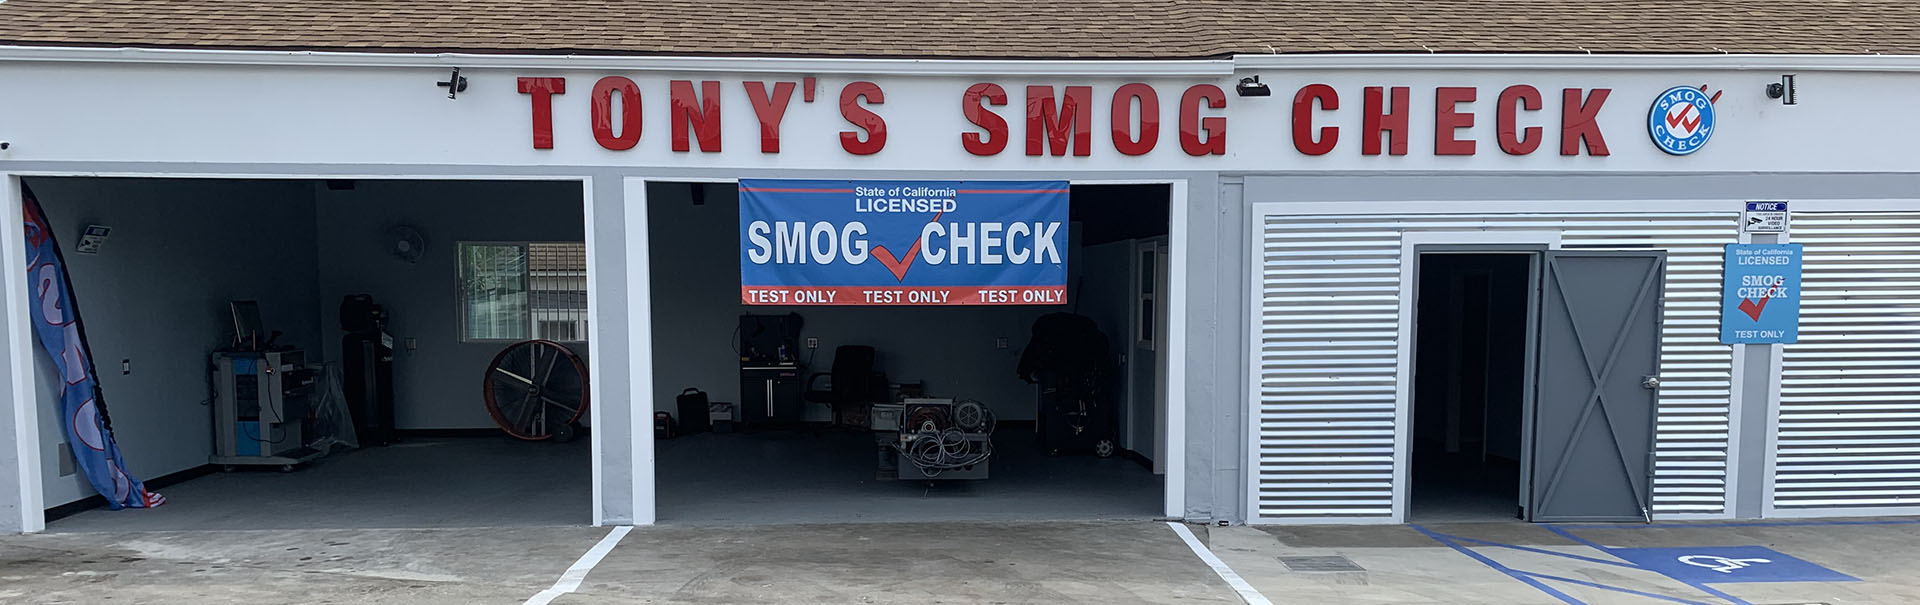 Tony's Smog Check Station Whittier, CA